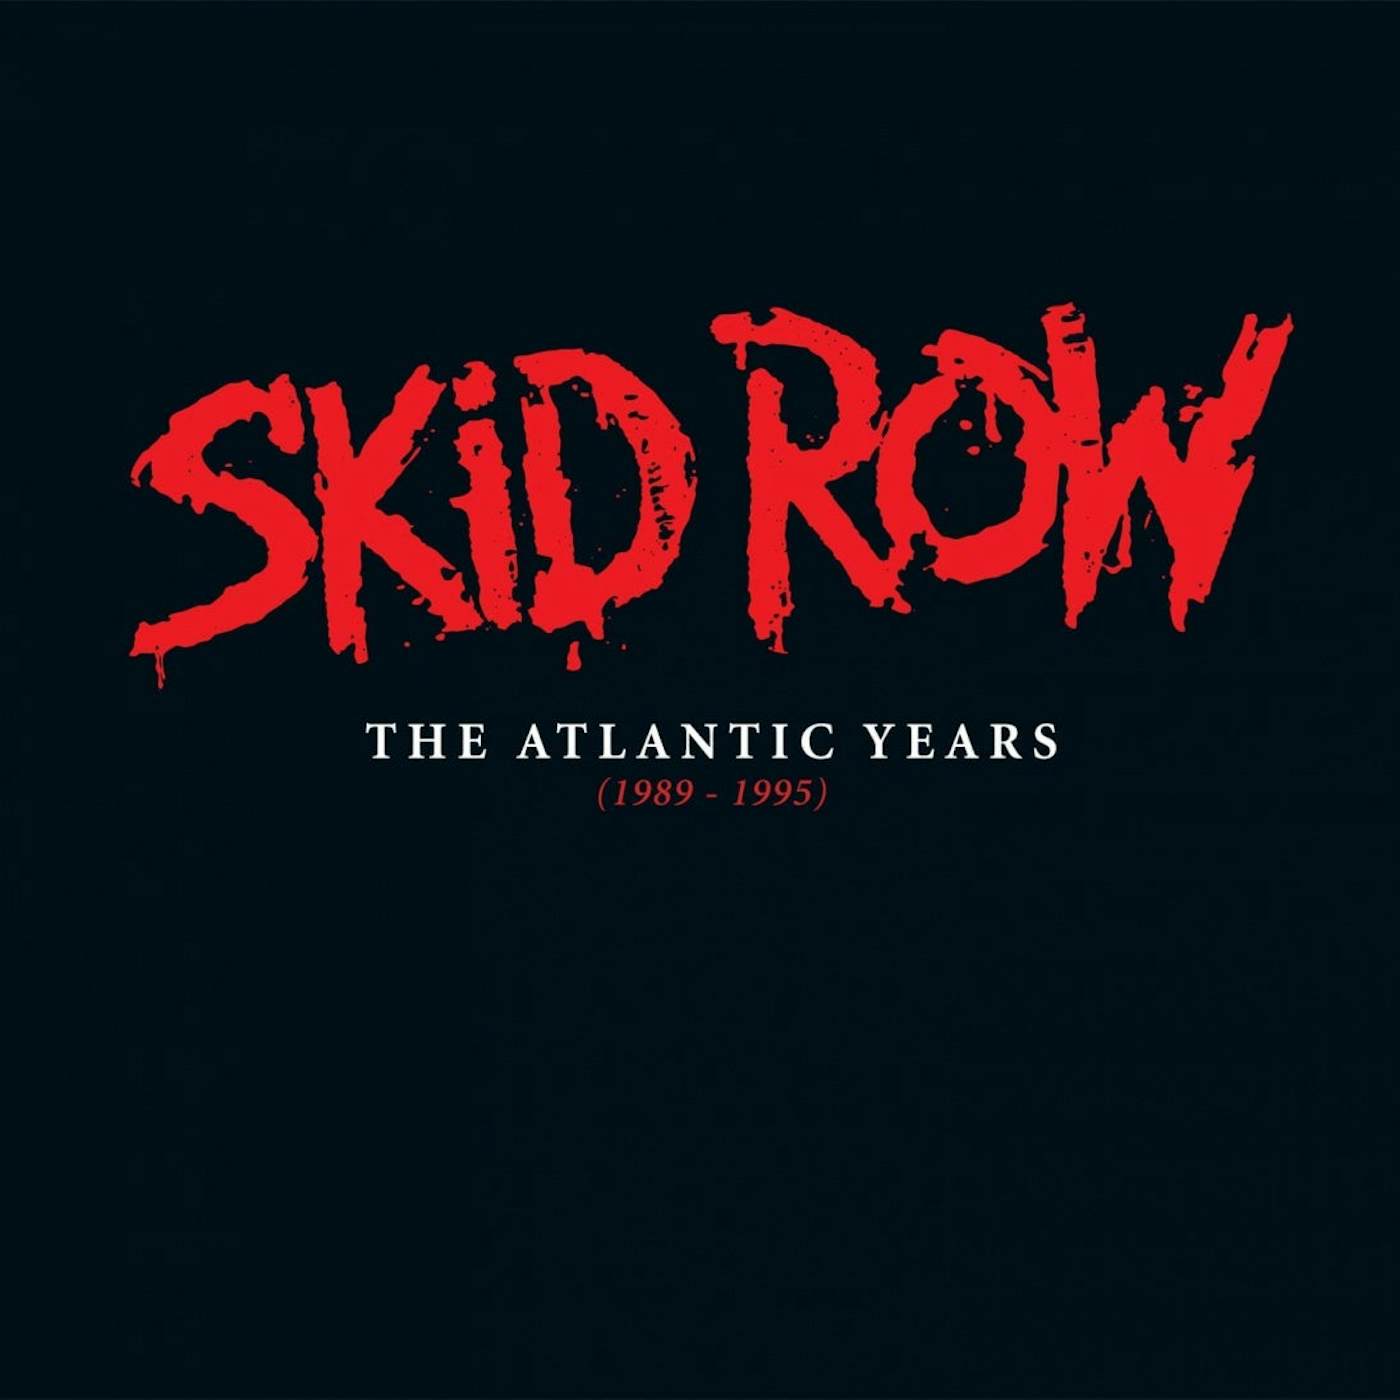 Skid Row The Atlantic Years 1989-1995